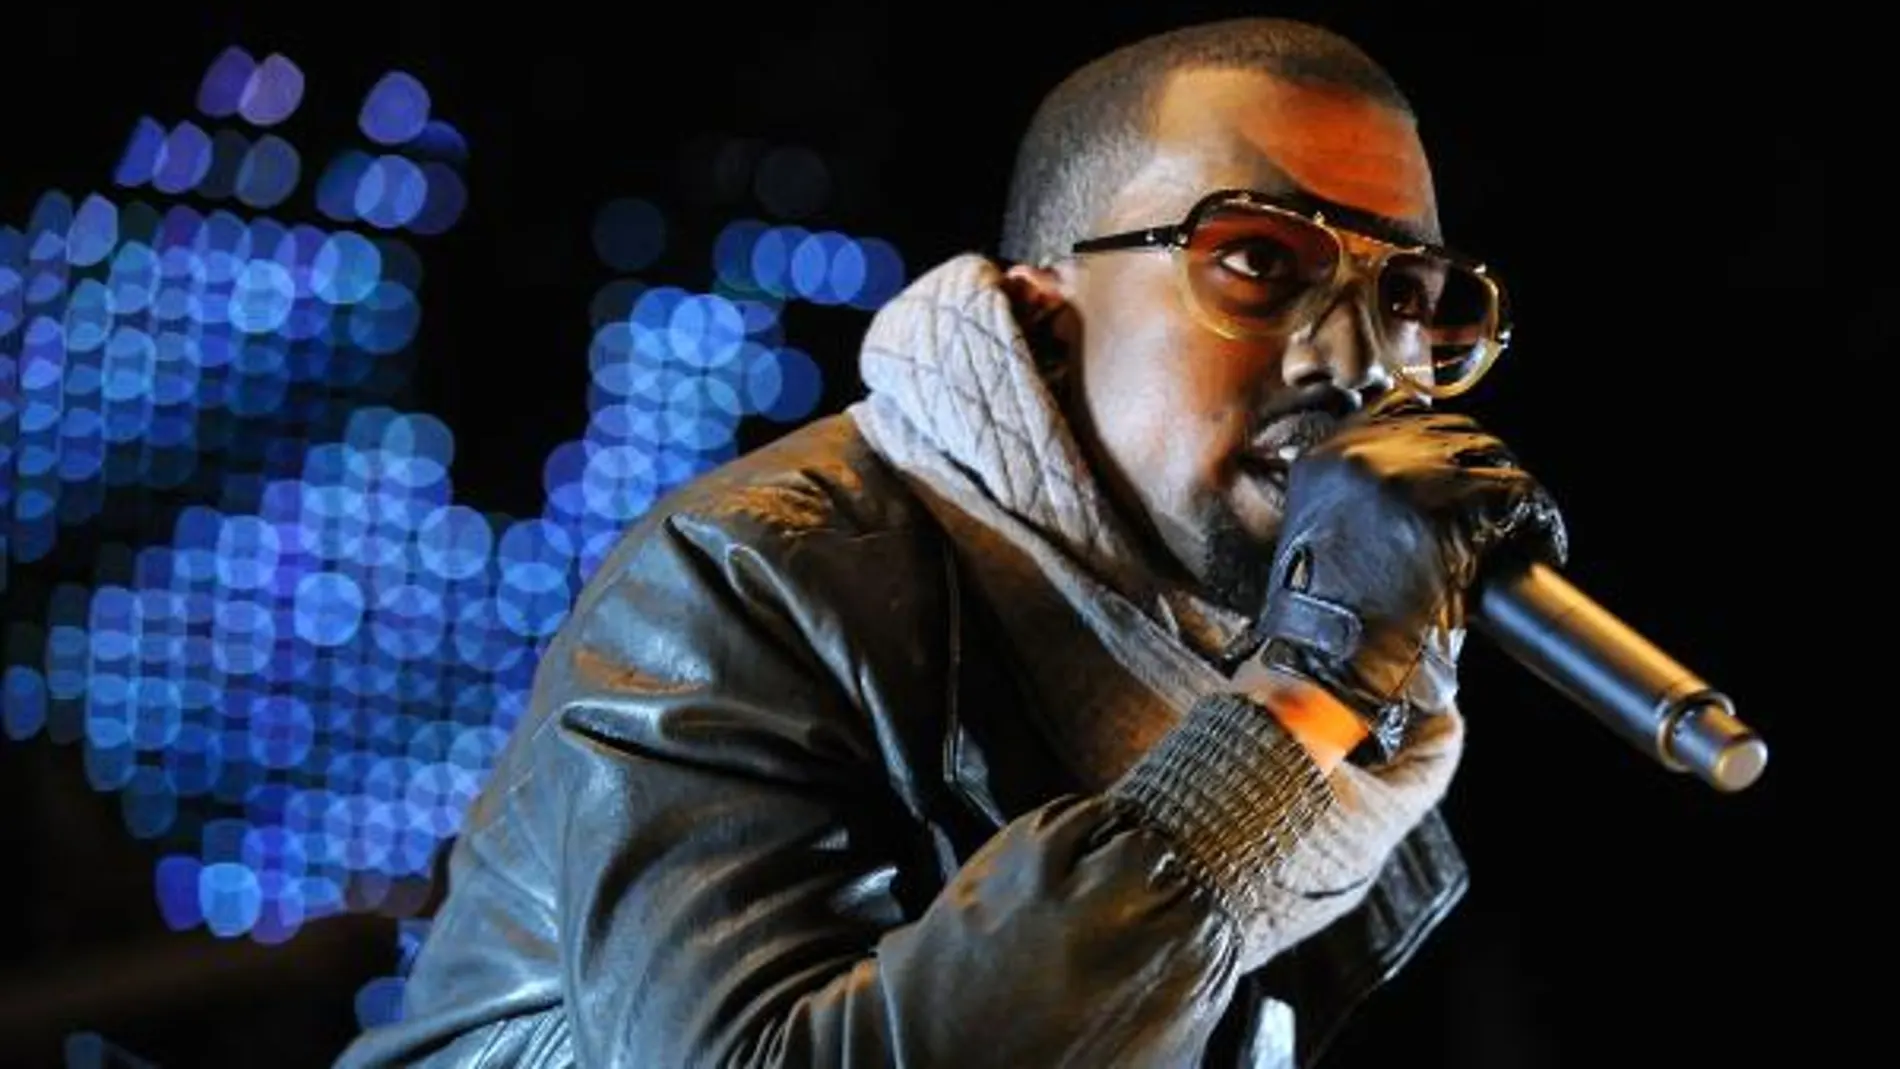 El rapero Kanye West